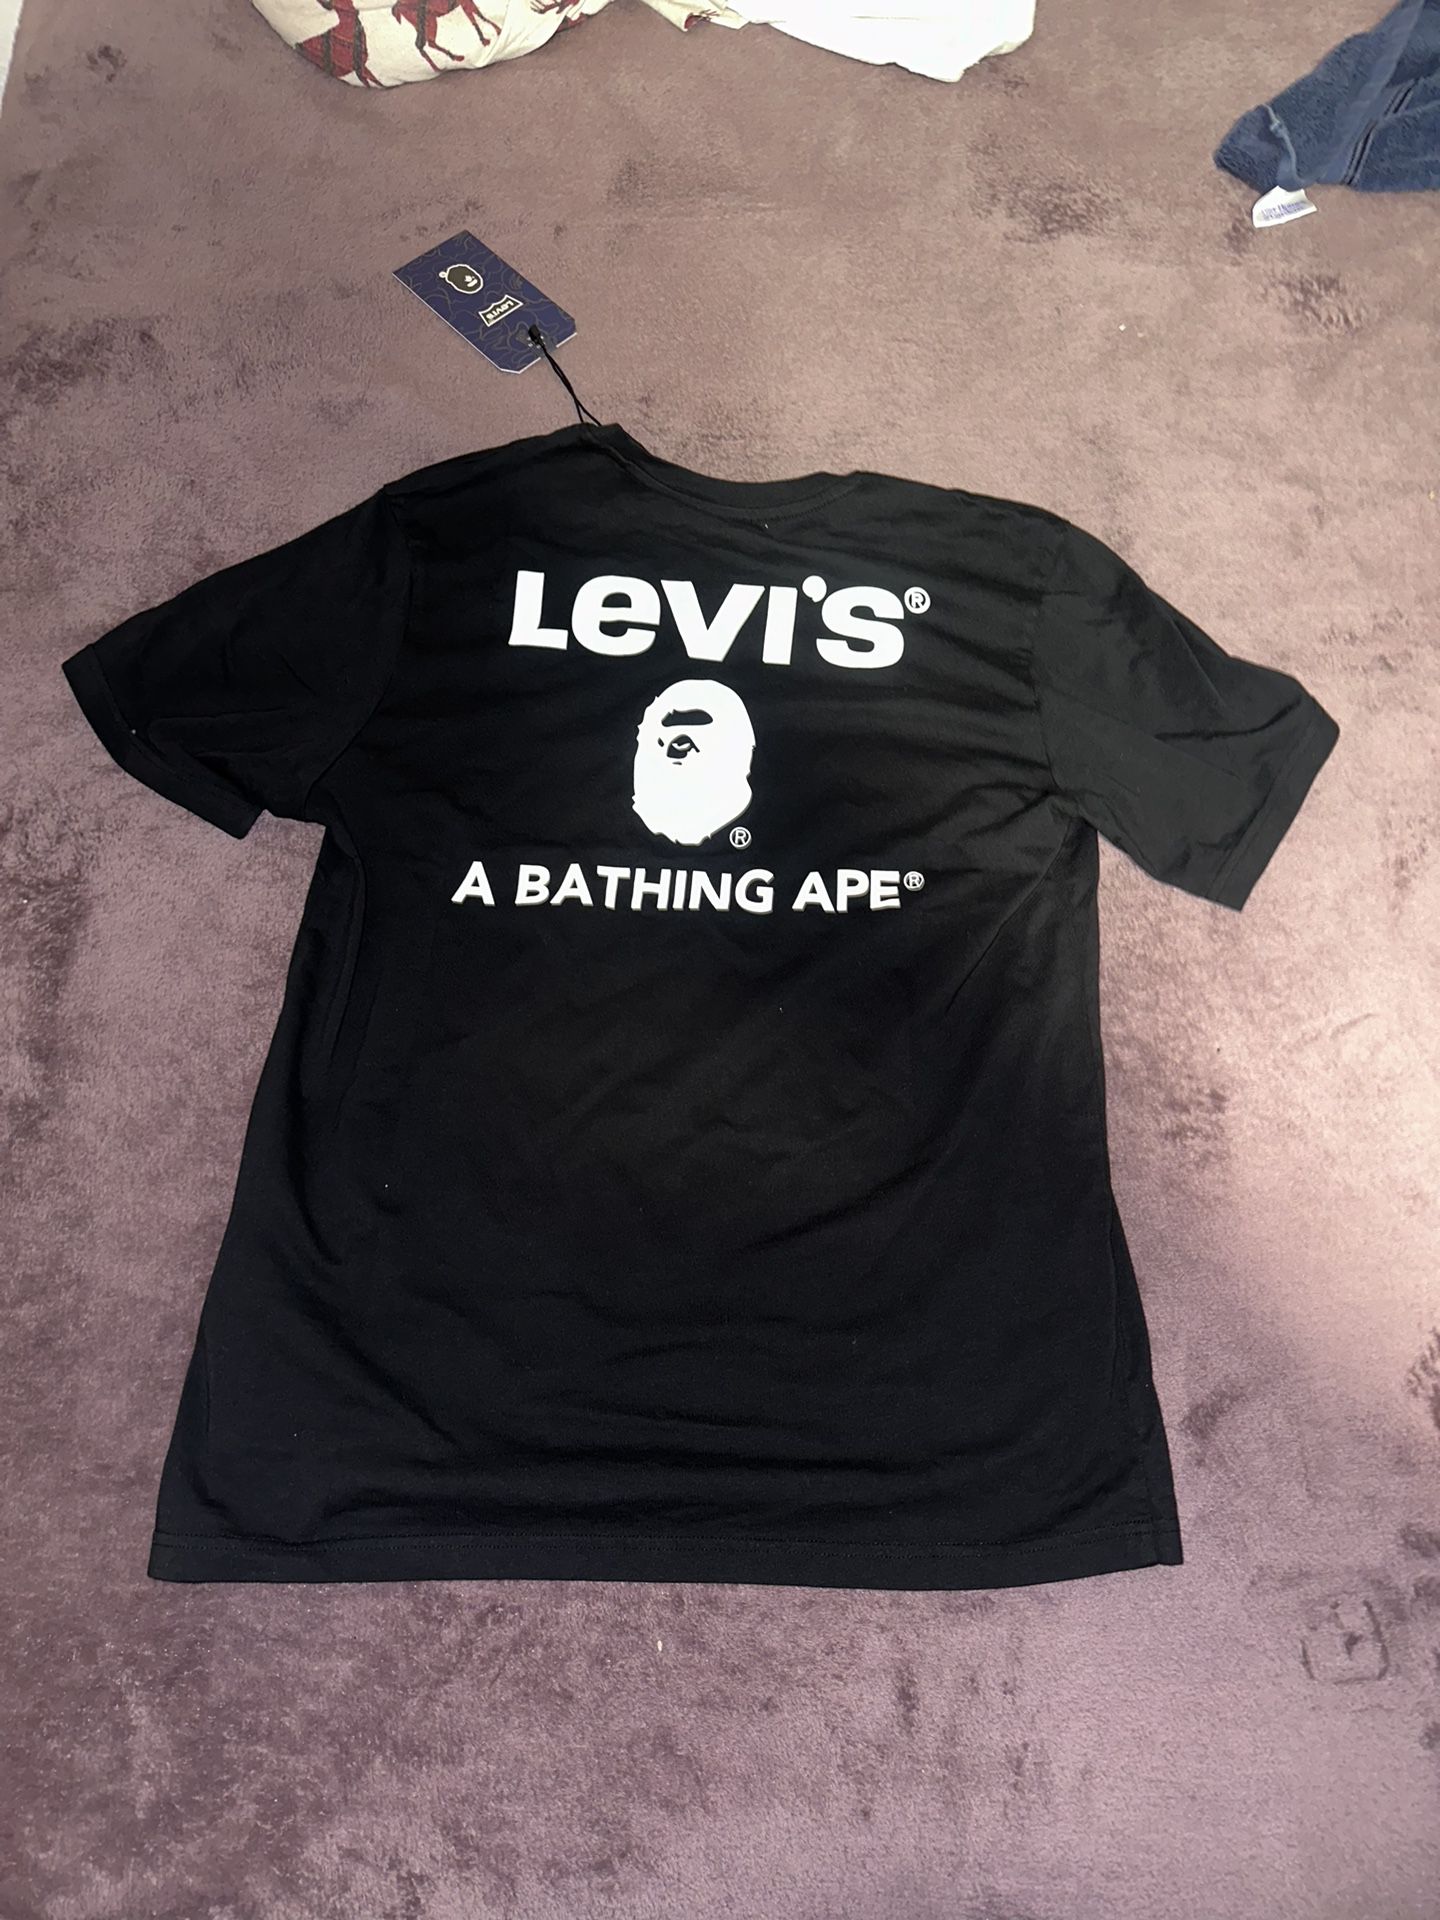 Levi’s X Bape Tee Shirt